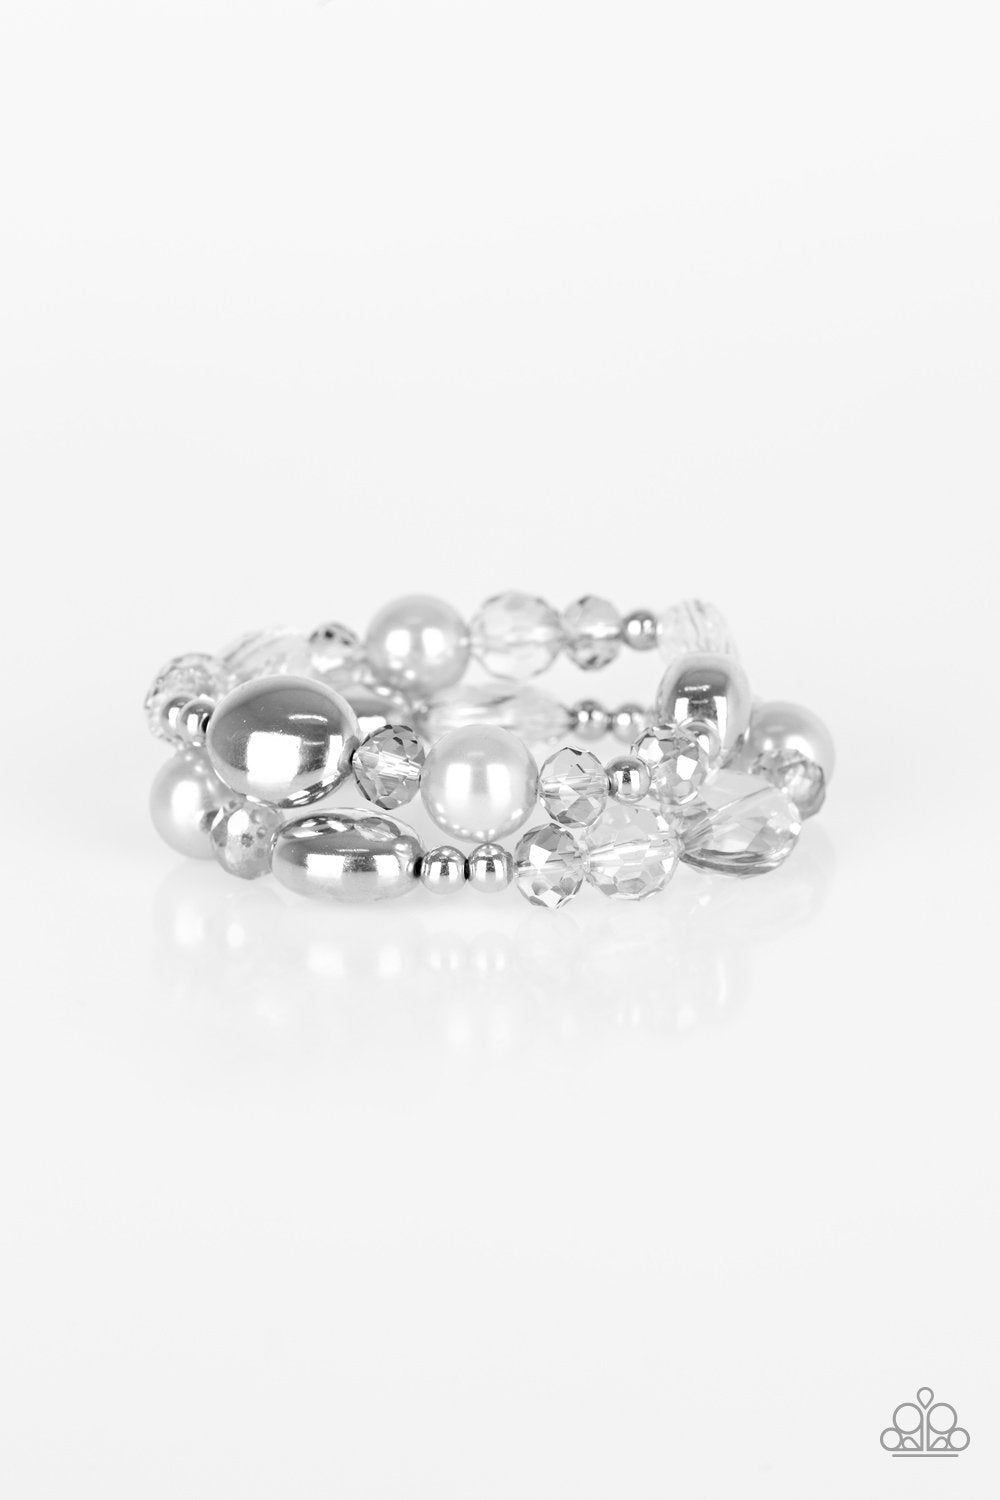 Downtown Dazzle Silver Bracelet Set - Paparazzi Accessories-CarasShop.com - $5 Jewelry by Cara Jewels